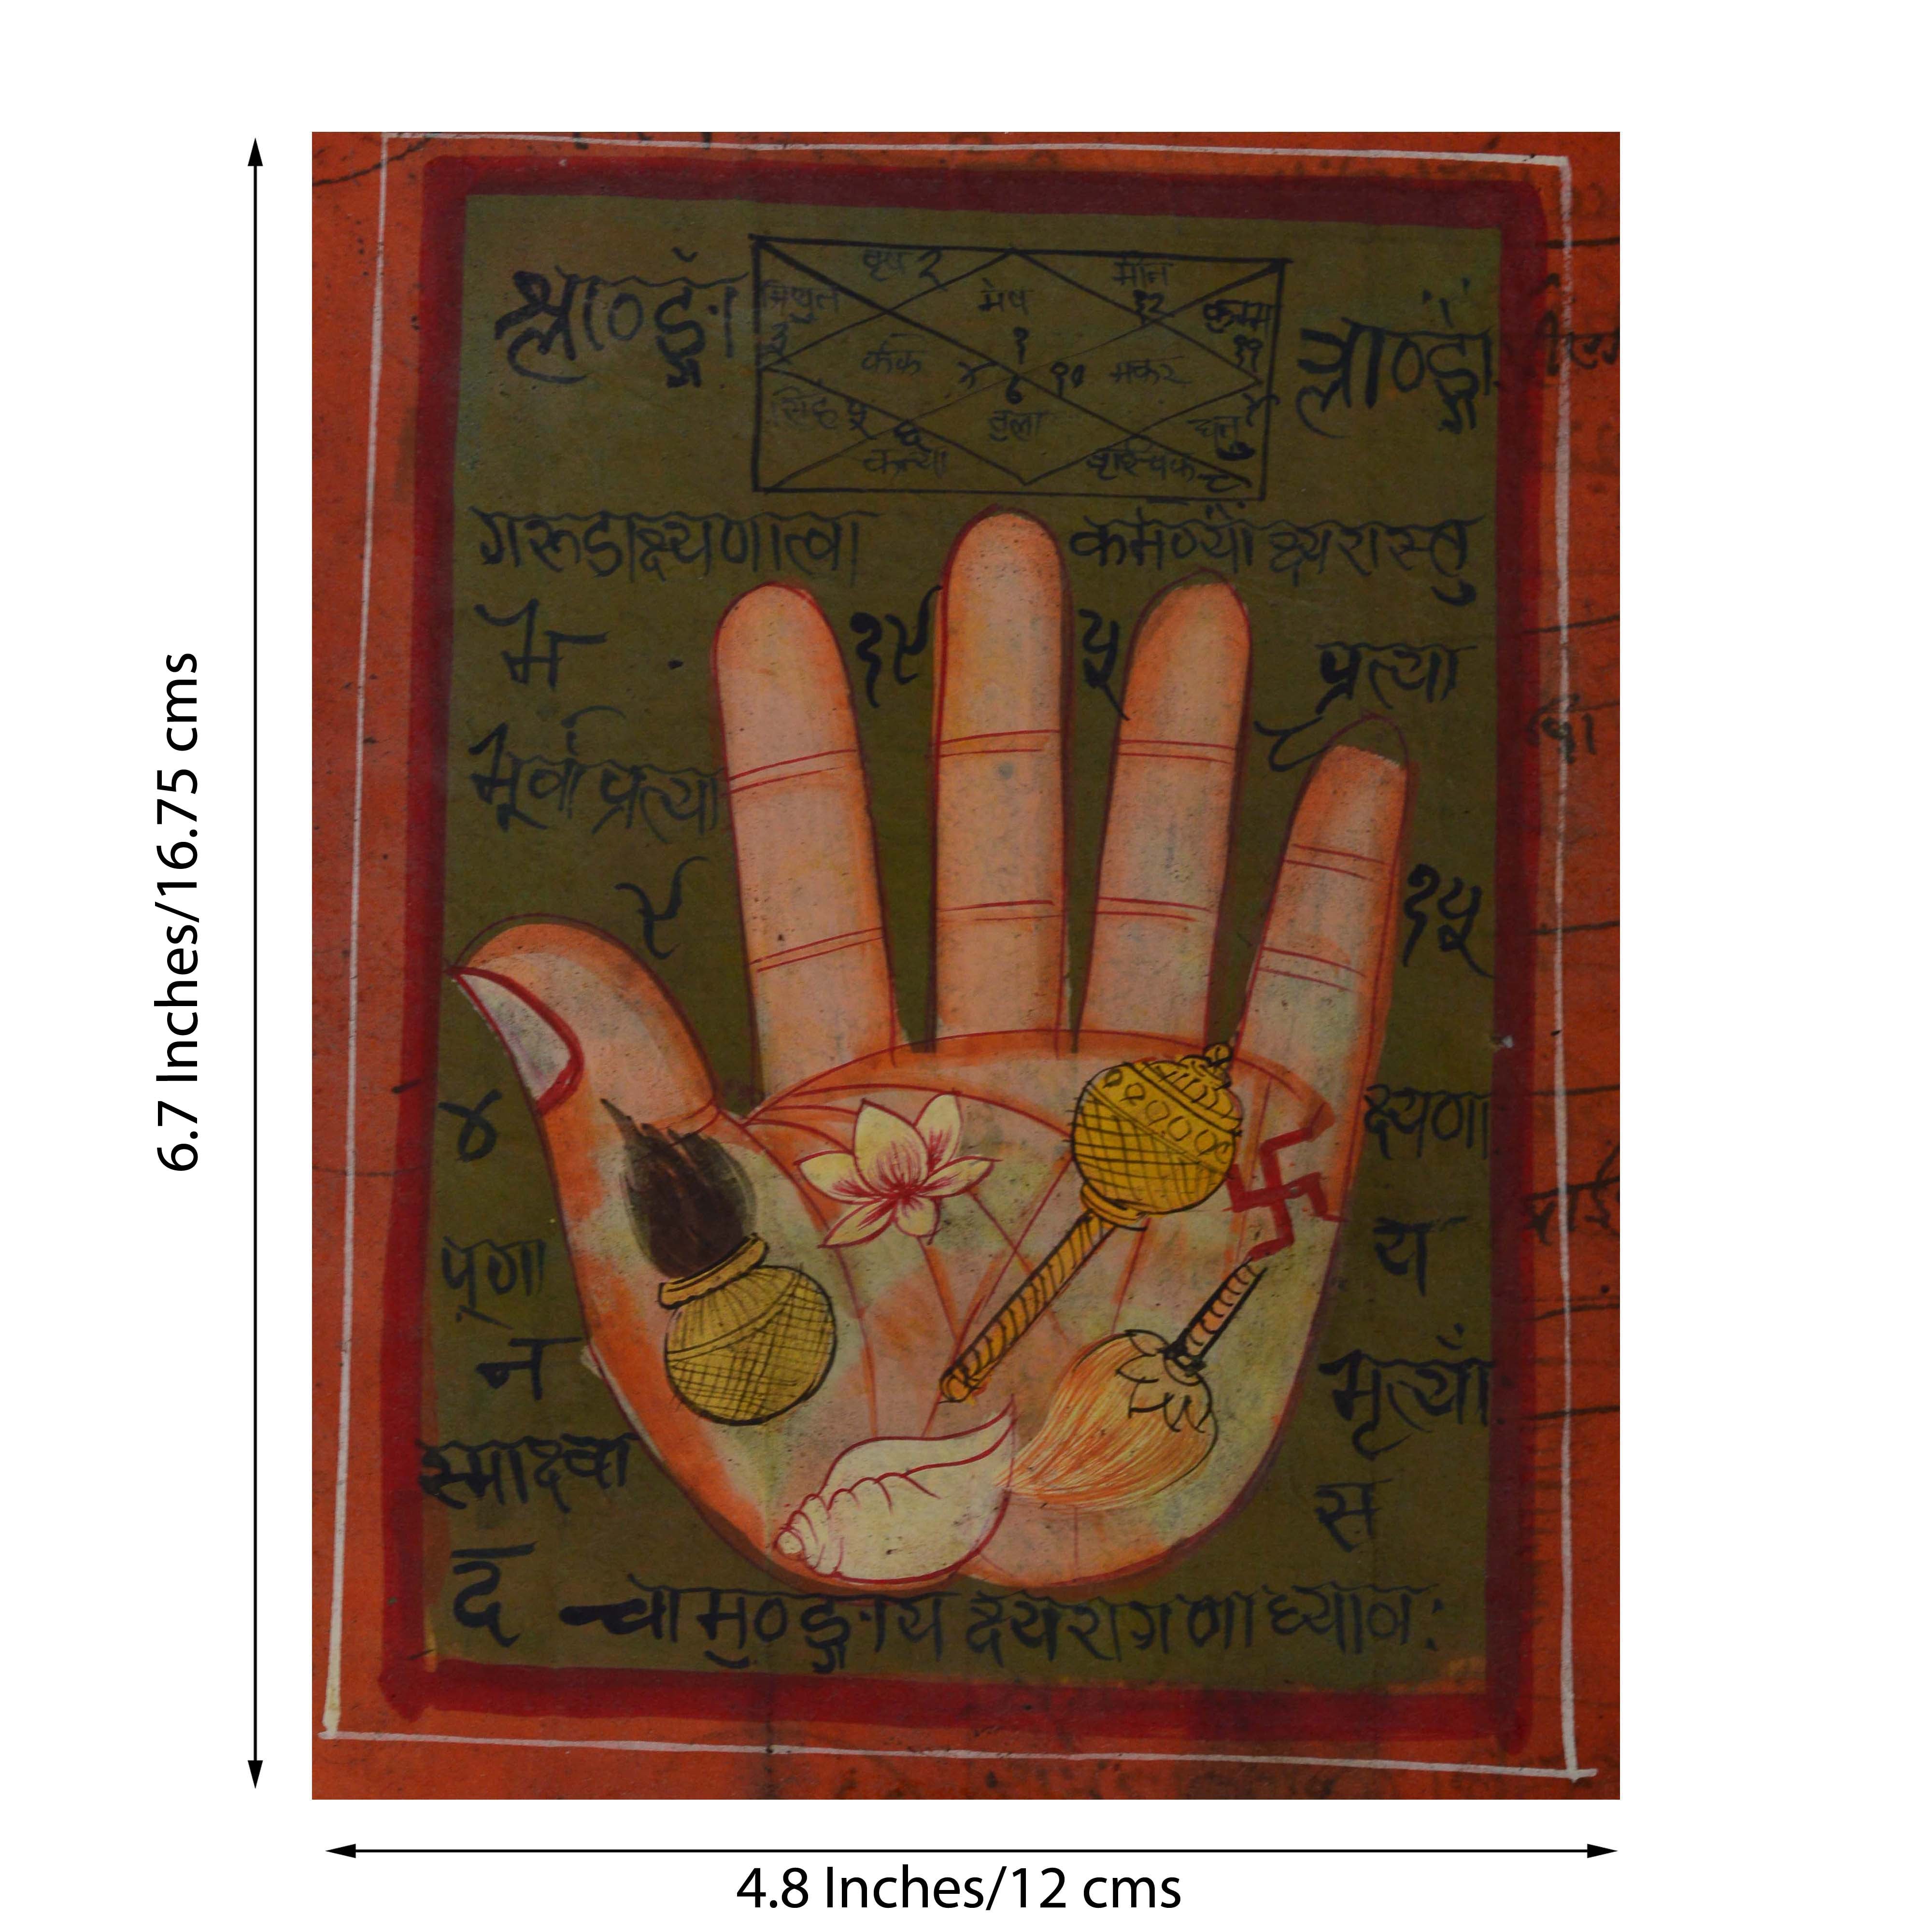 Abstract Vishnu Symbols Original Art Paper Painting 1